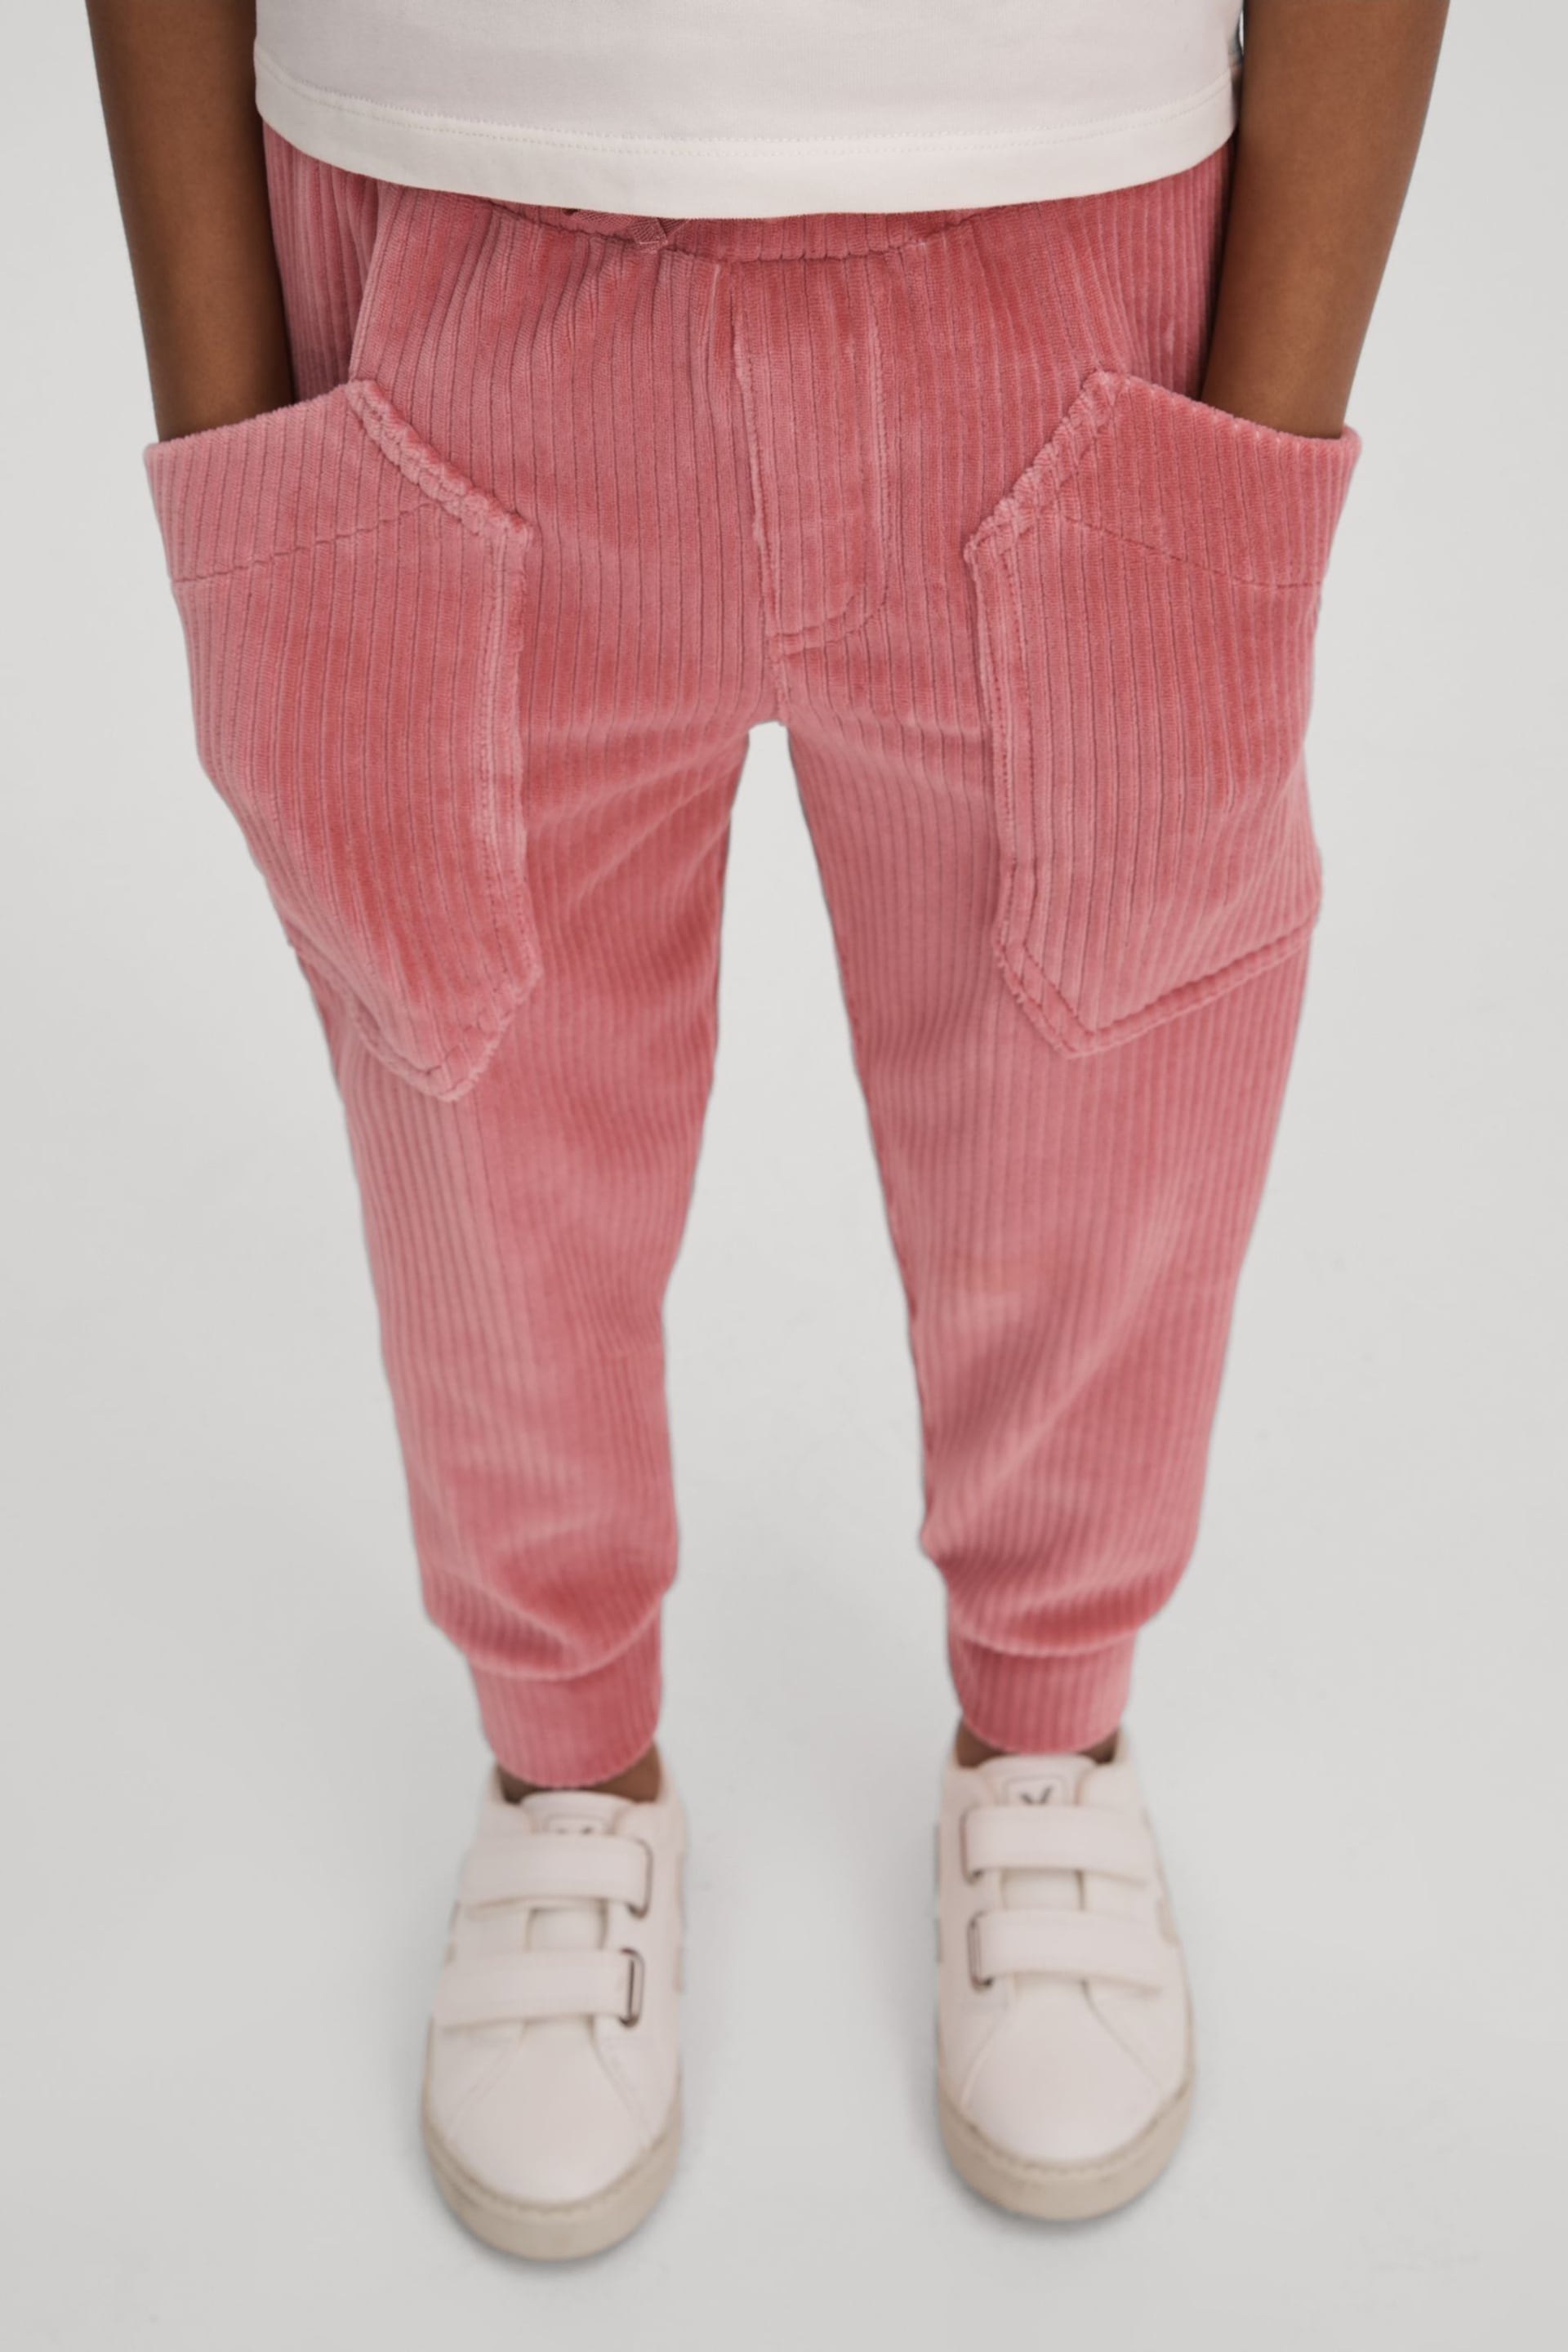 Reiss Pink Kora Junior Relaxed Corduroy Drawstring Trousers - Image 3 of 6